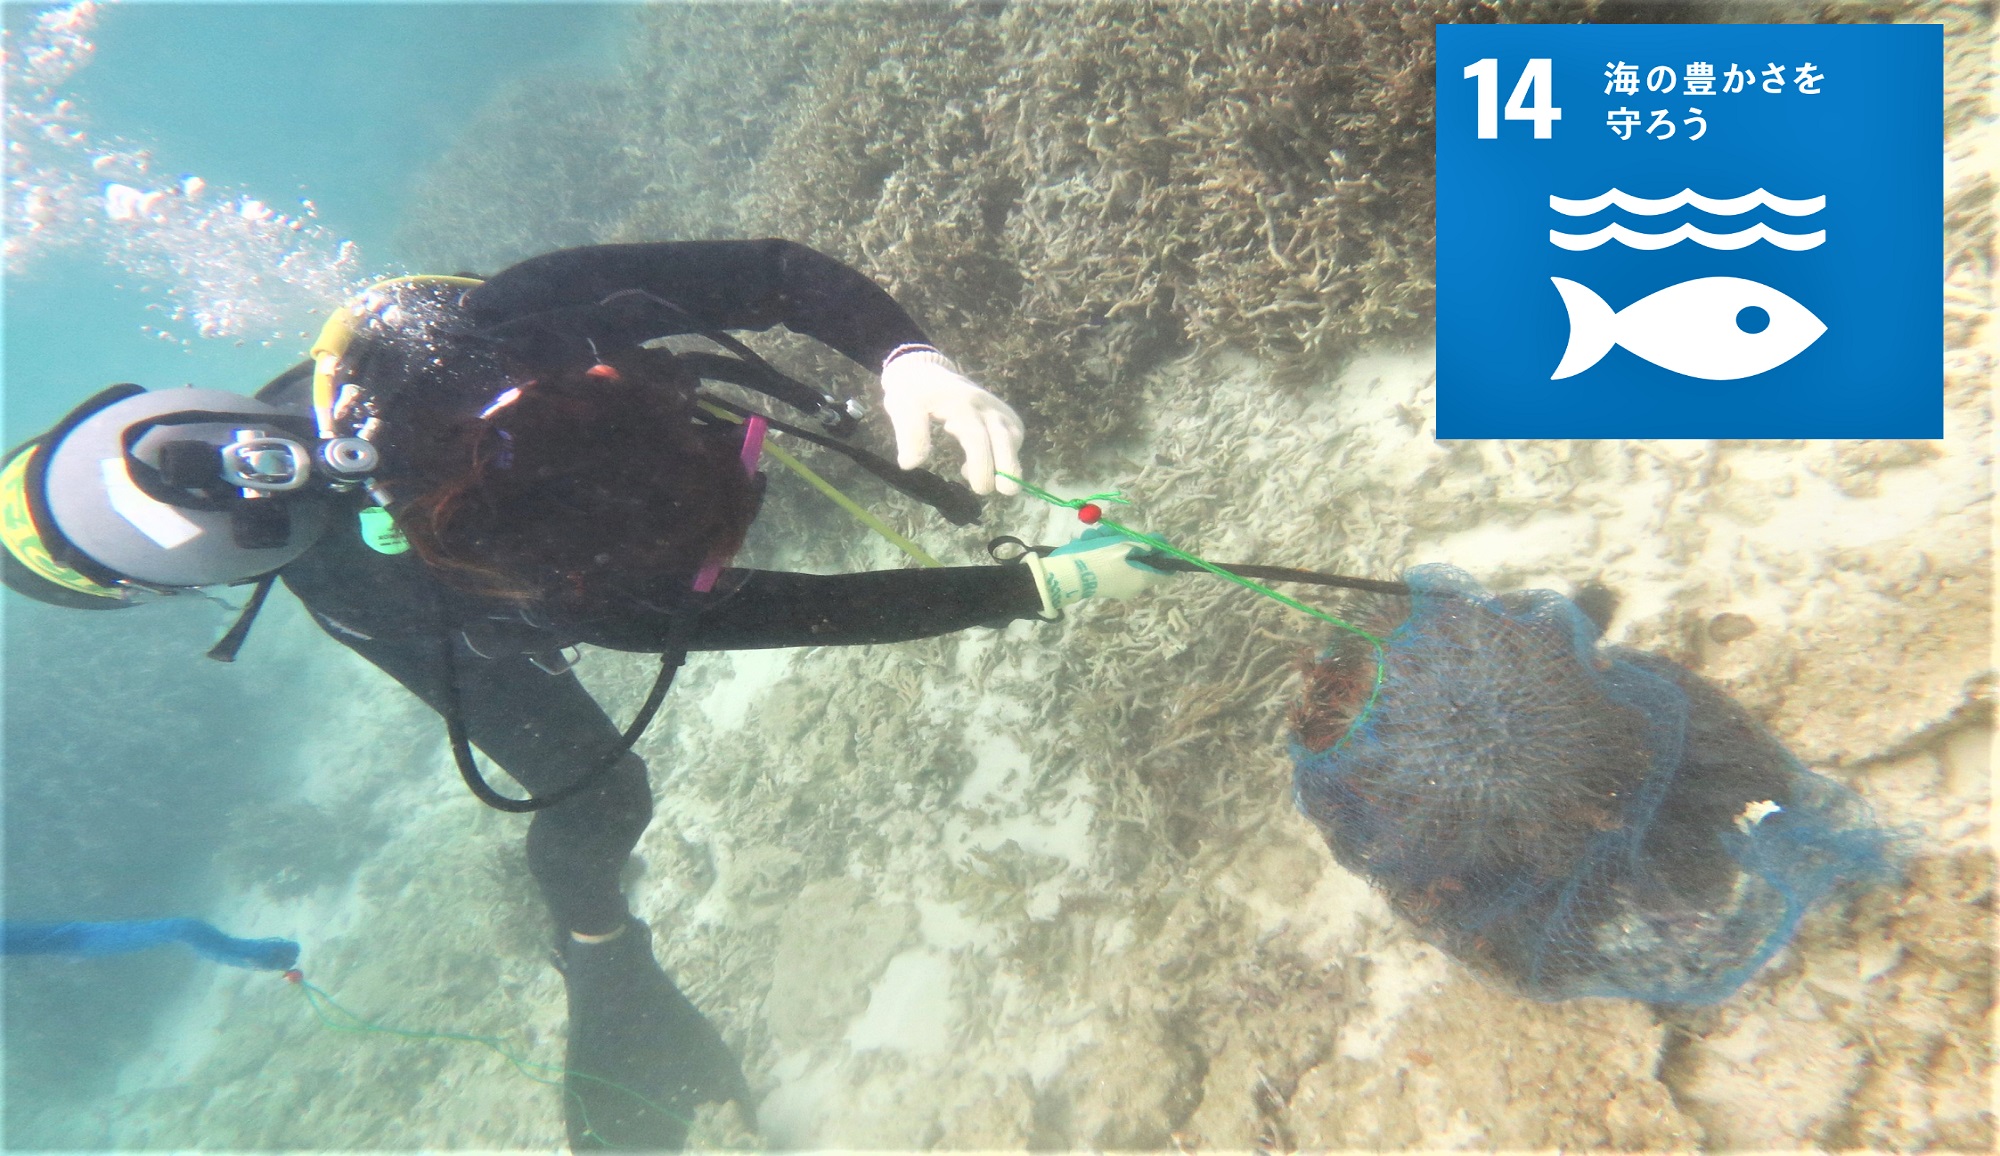 【SDGs】ビーチ内サンゴ礁の保全活動(海の豊かさを守ろう)